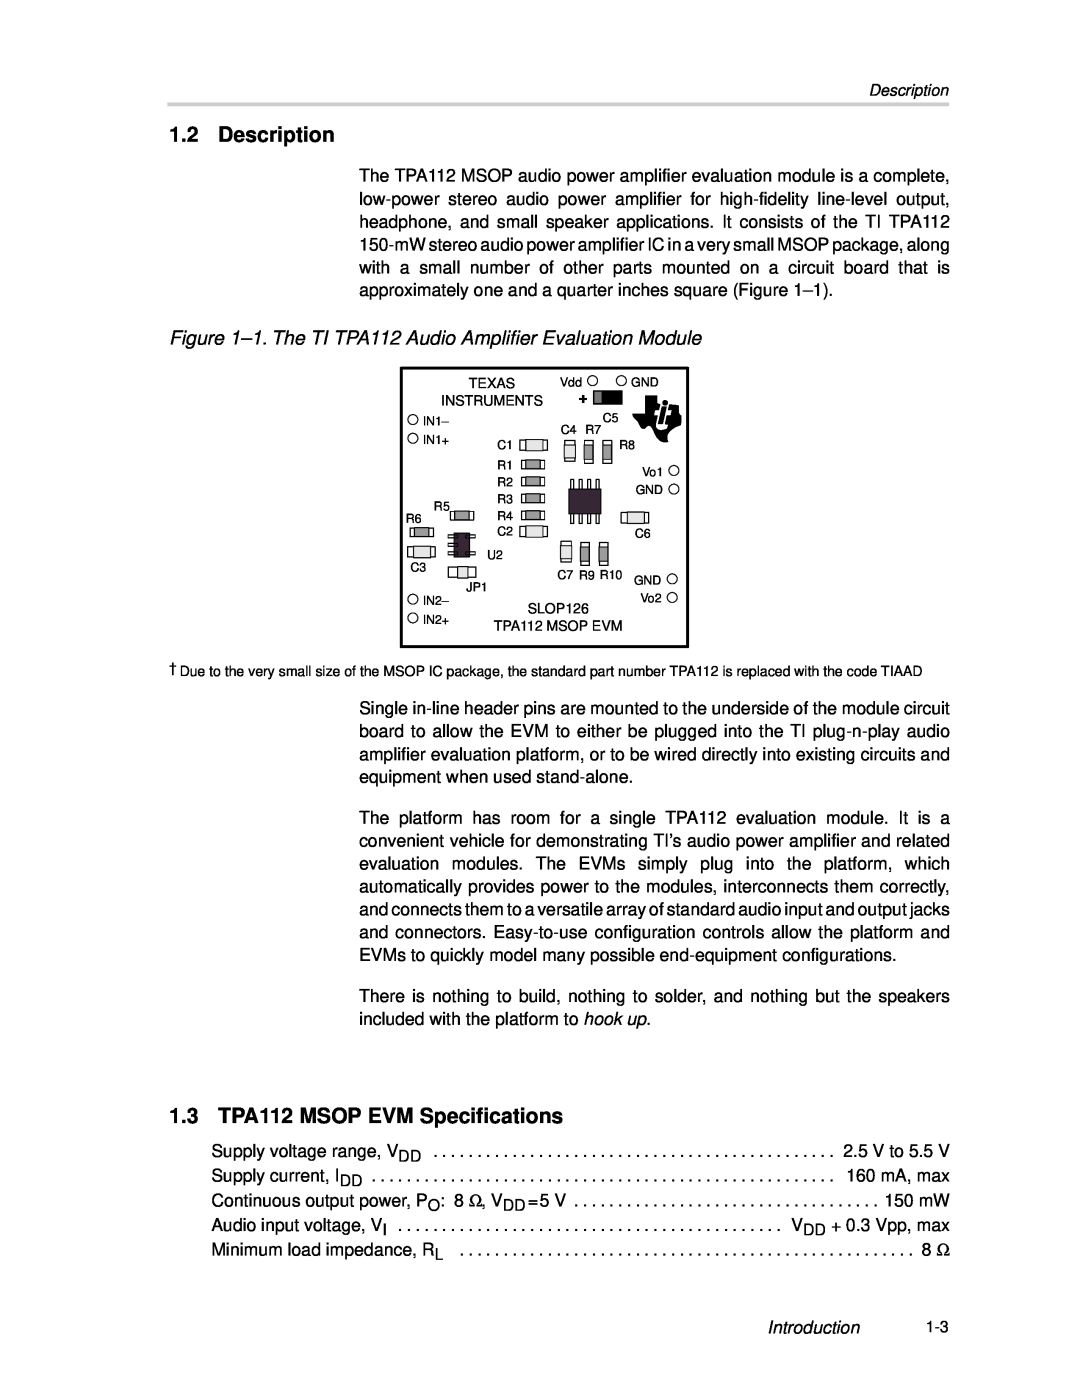 Texas Instruments SLOU023A manual Description, 1.3 TPA112 MSOP EVM Specifications, Introduction 